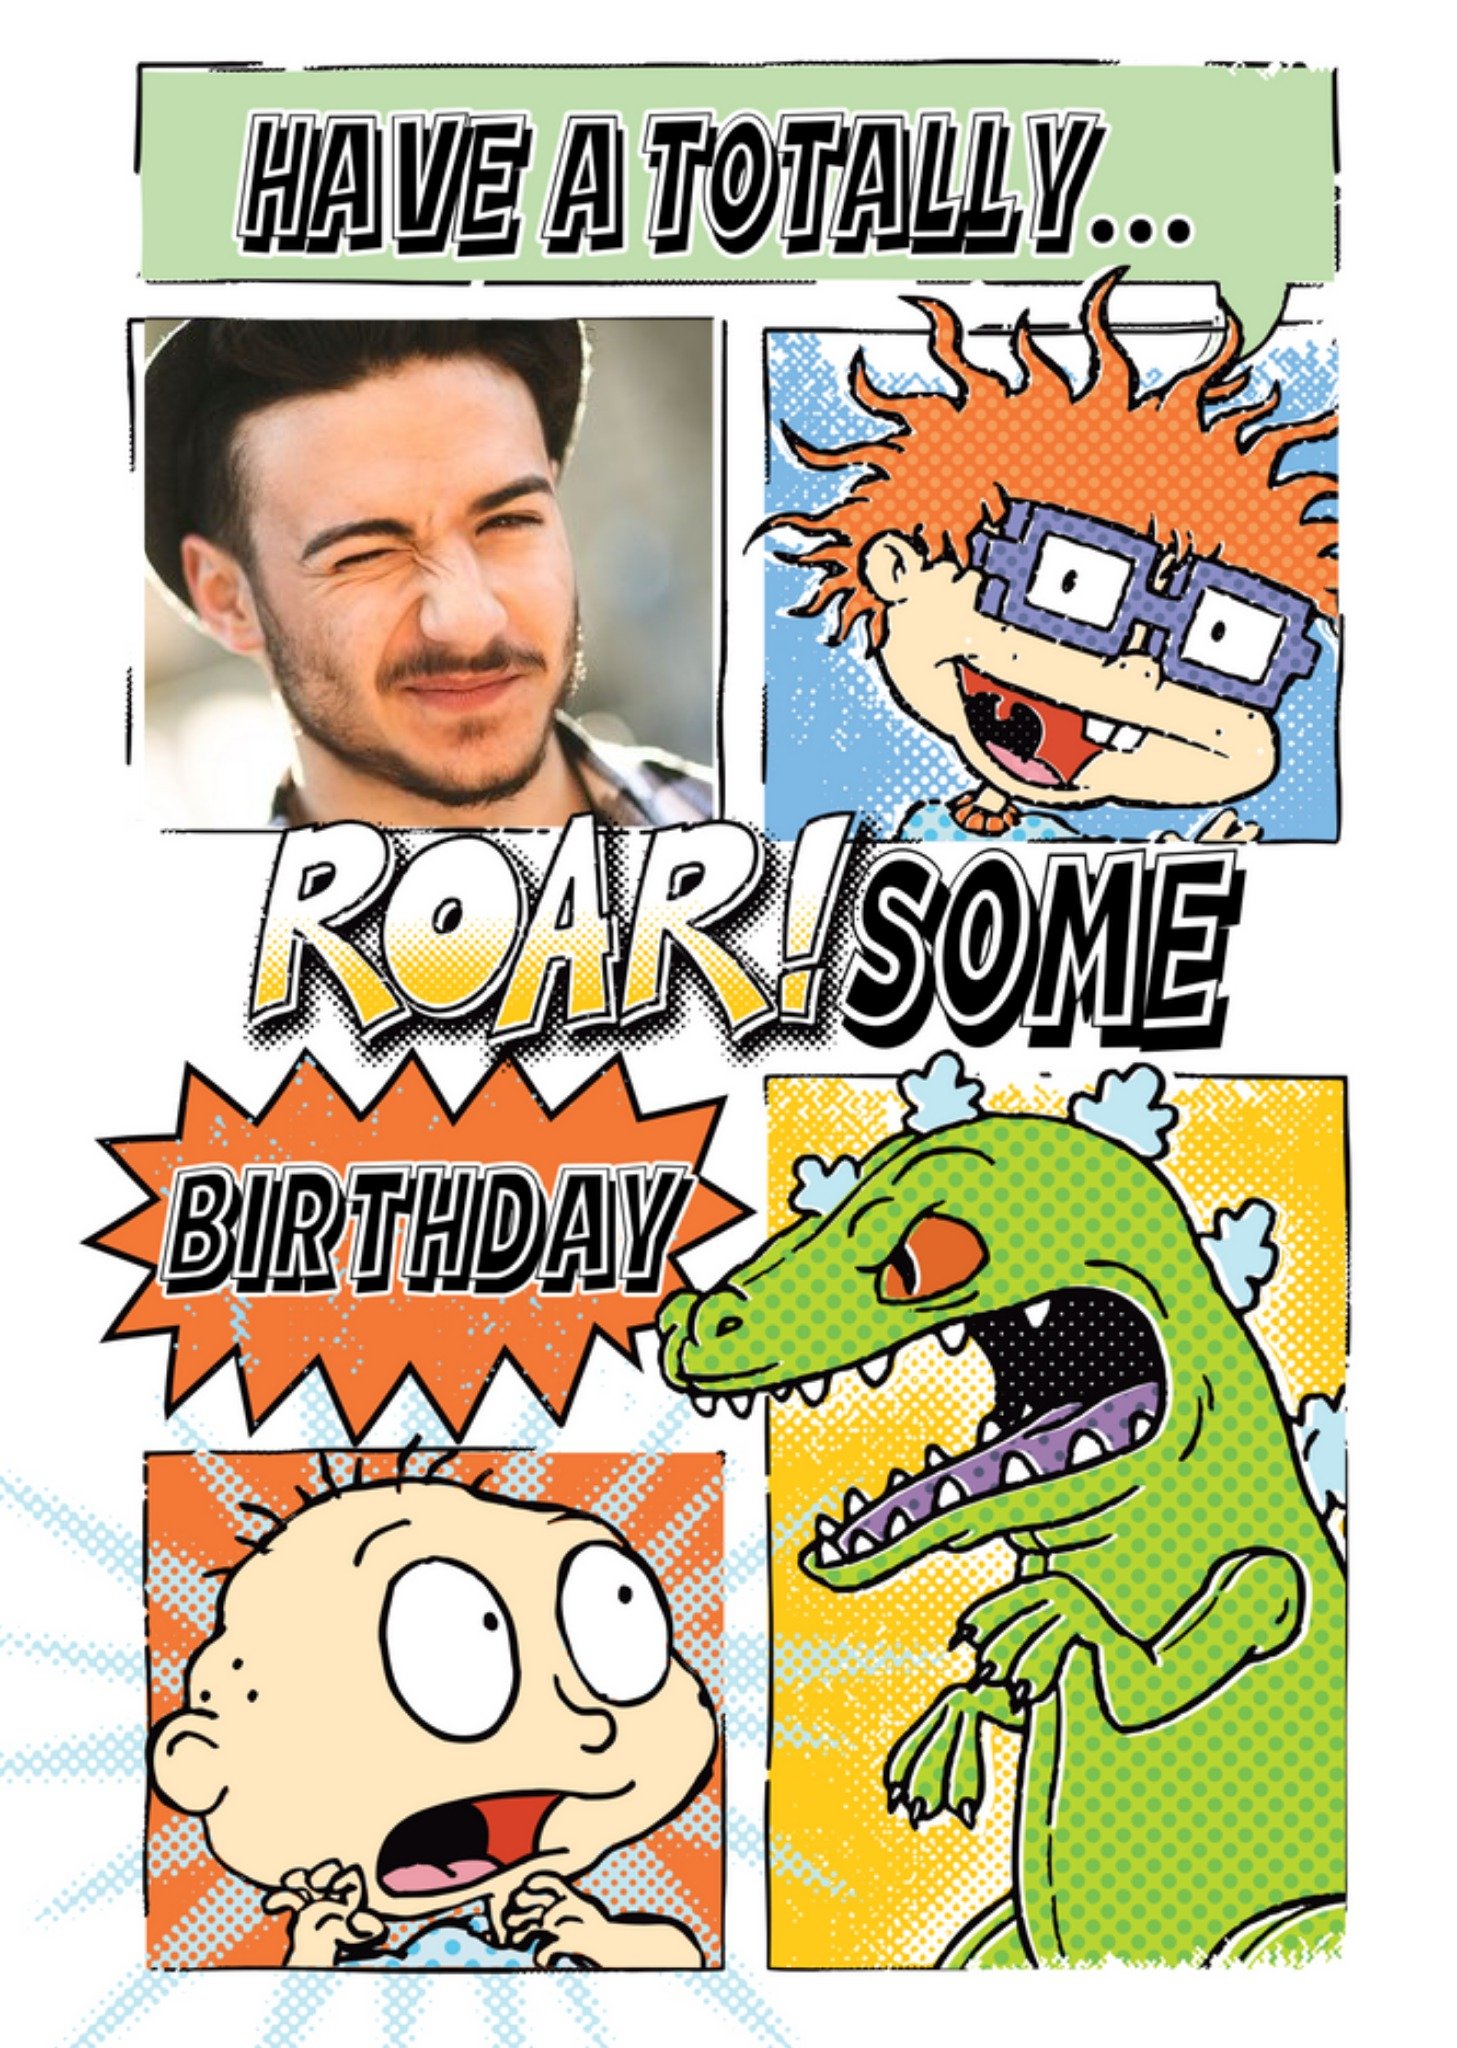 Nickelodeon Rugrats Totally Roar Some Photo Upload Birthday Card Ecard